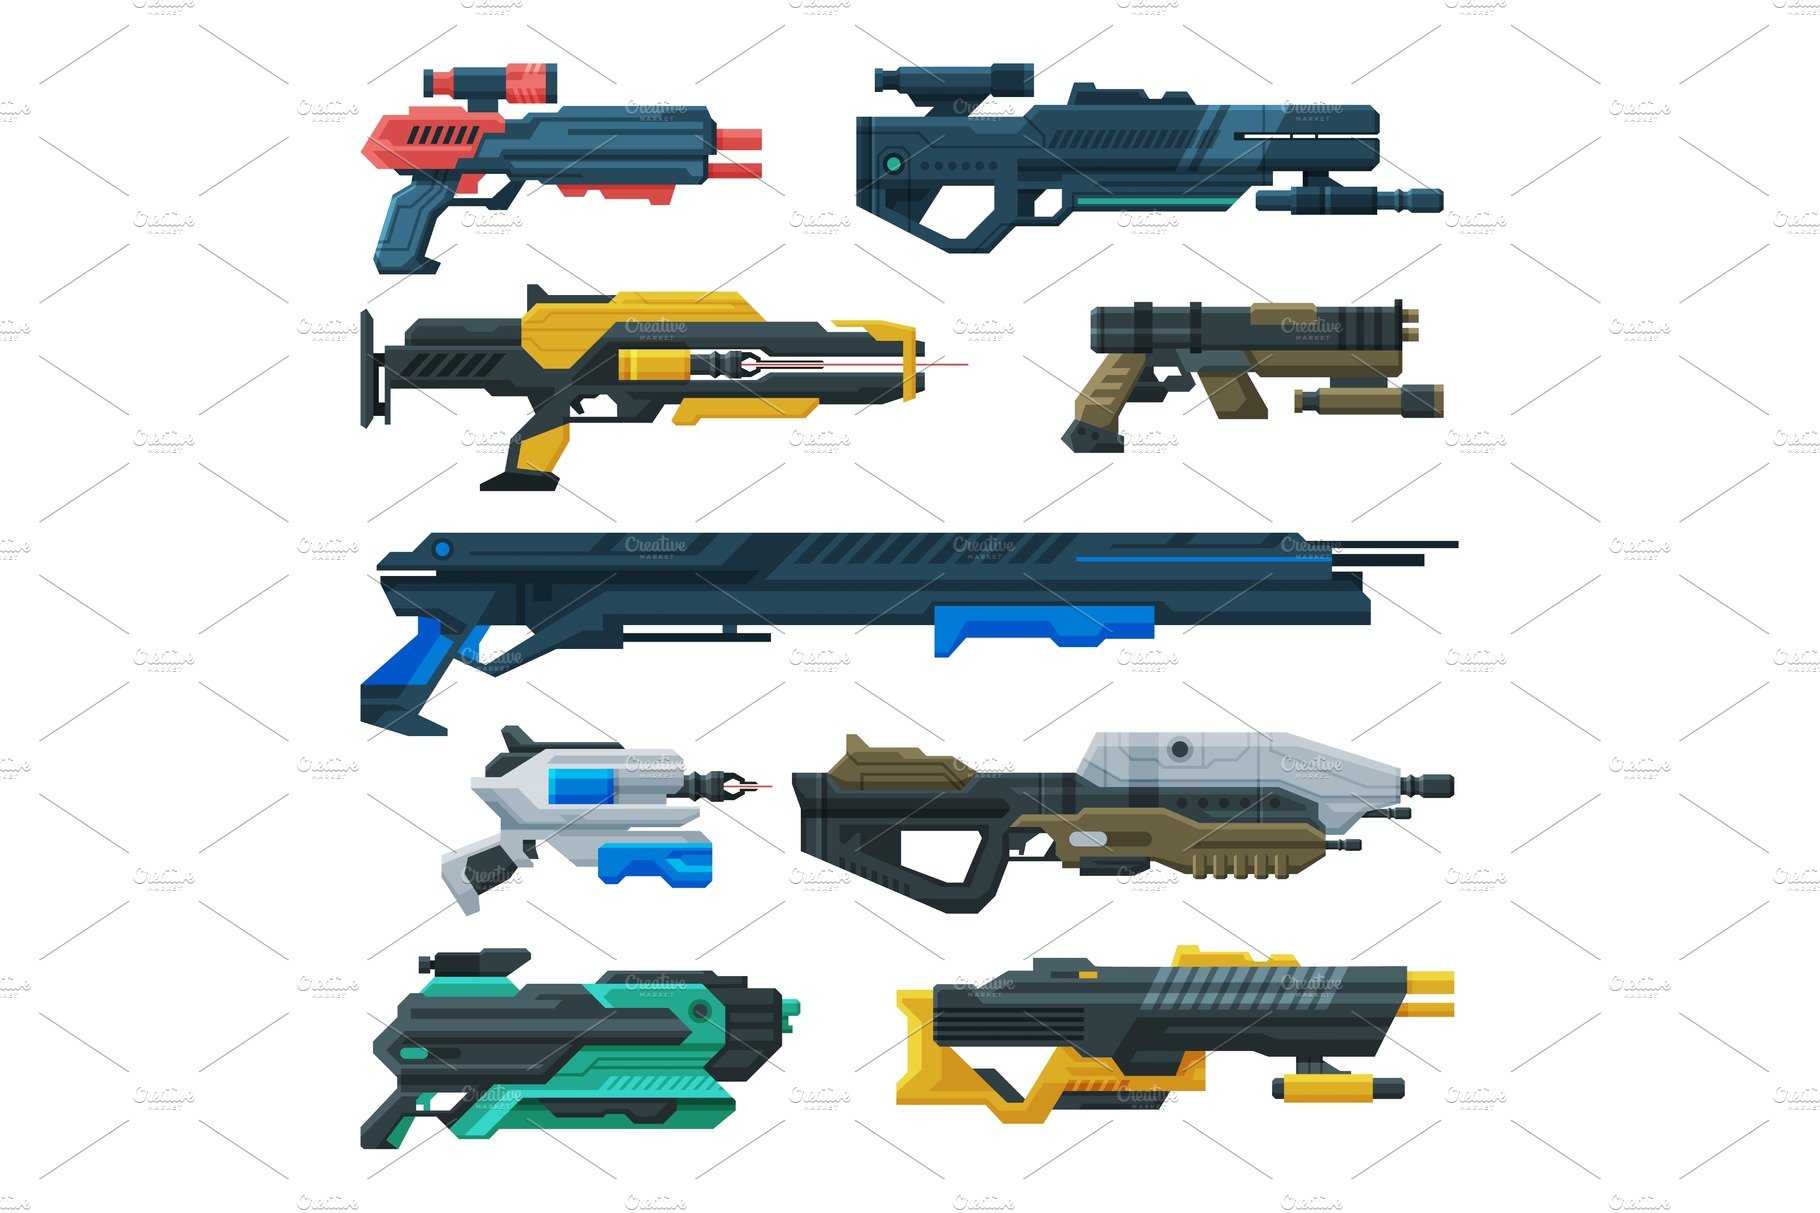 Futuristic Space Guns Blasters cover image.